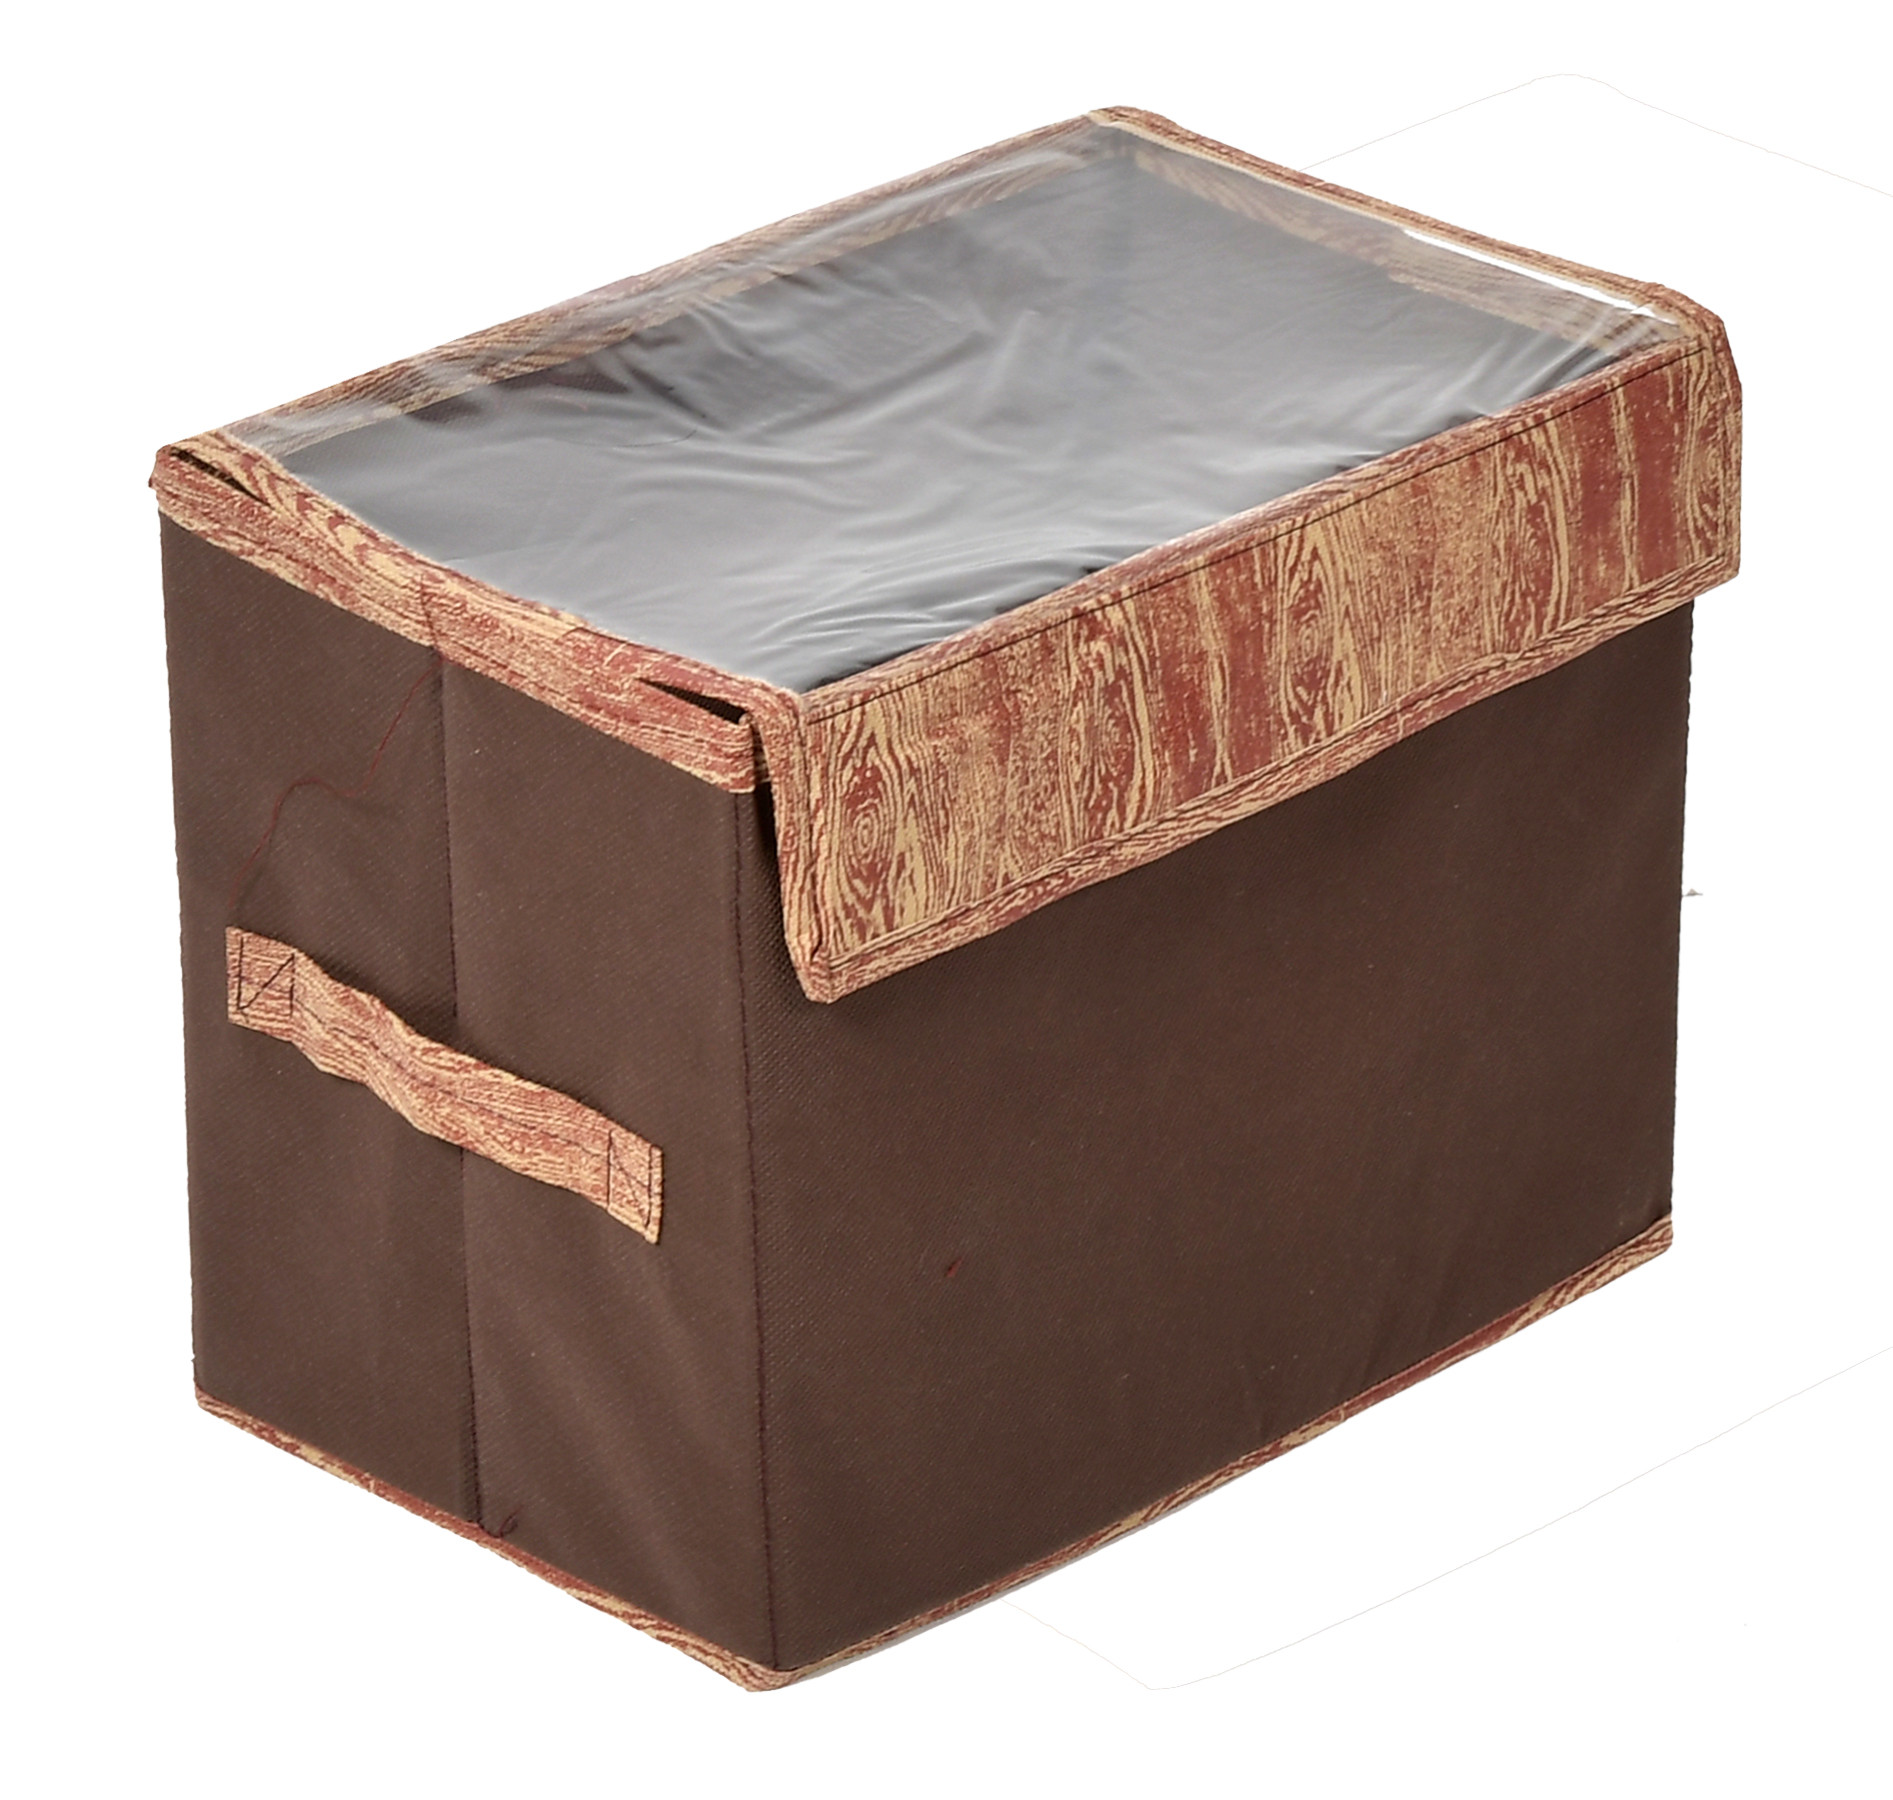 Kuber Industries Wooden Design Multiuses Medium Non-Woven Storage Box/Organizer With Tranasparent Lid (Brown) -44KM0435